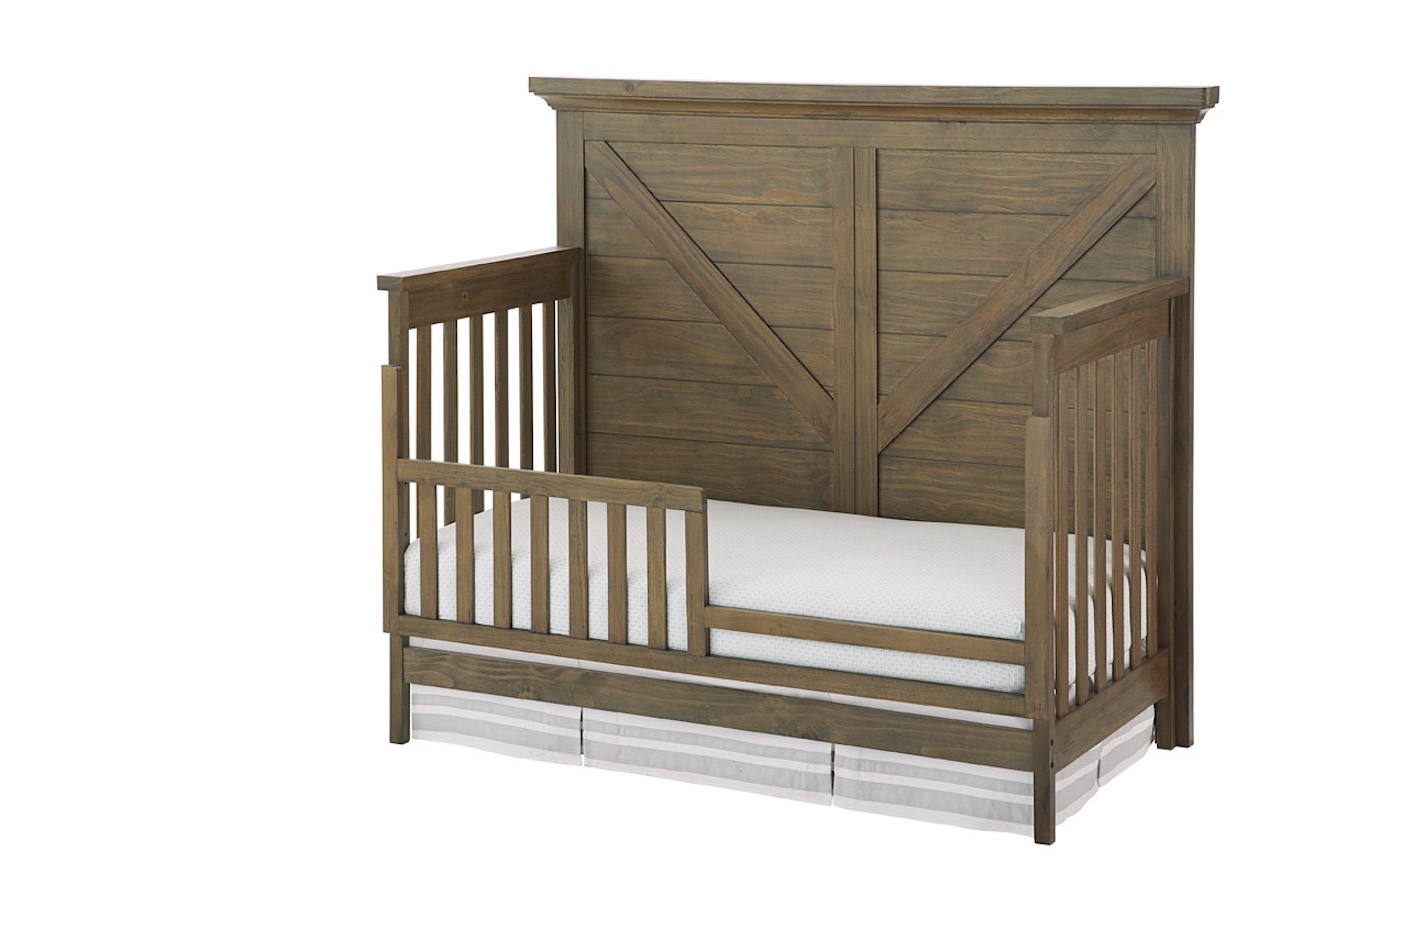 Westwood Design Westfield Convertible Crib - Harvest Brown